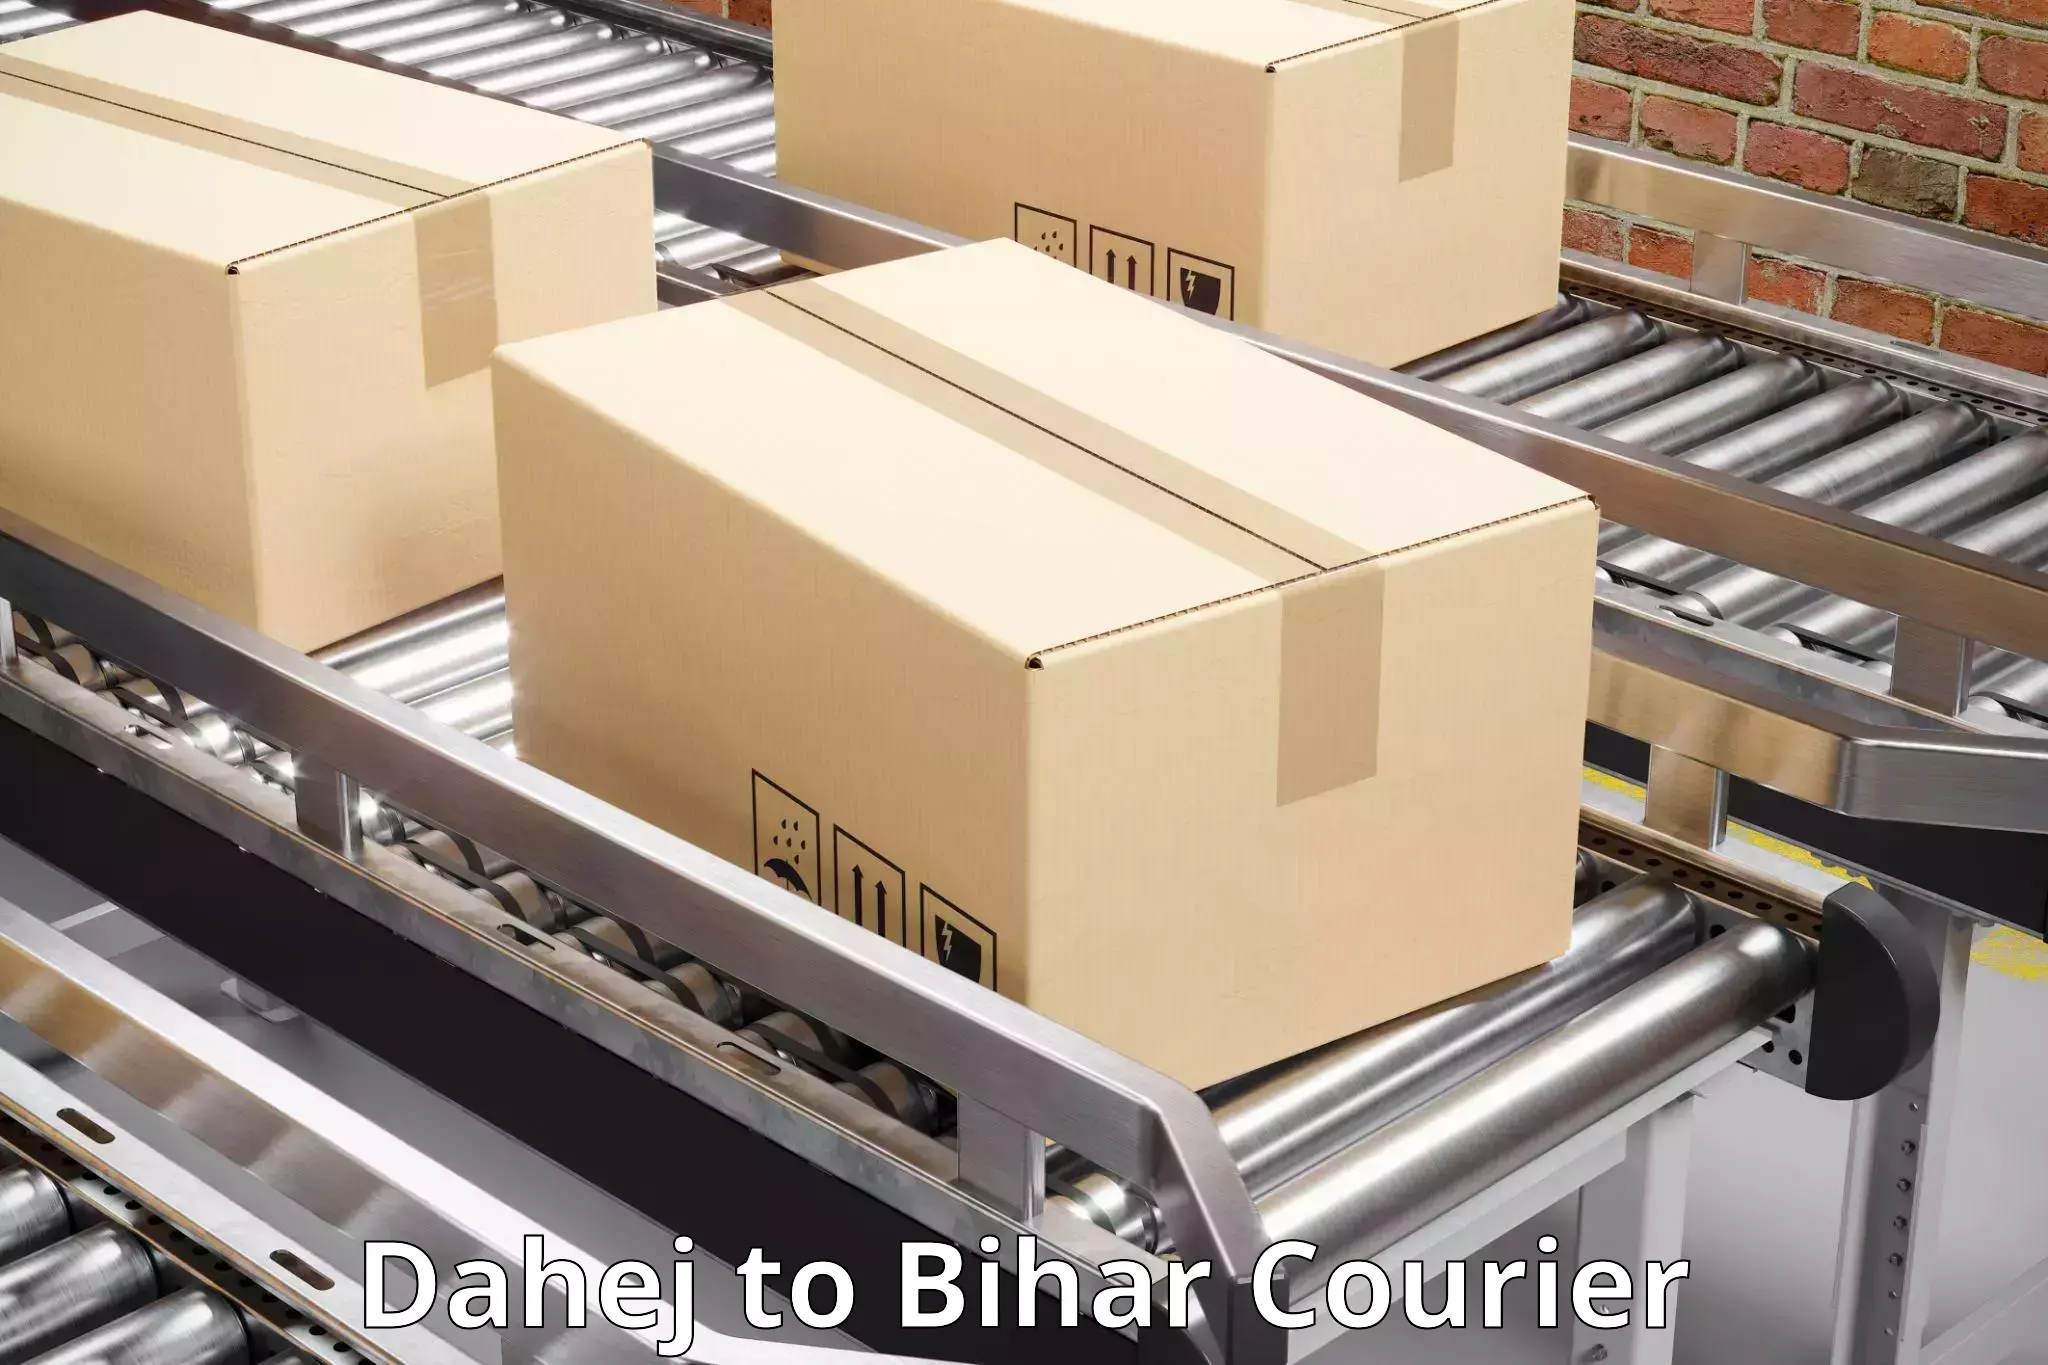 Subscription-based courier Dahej to Bihar